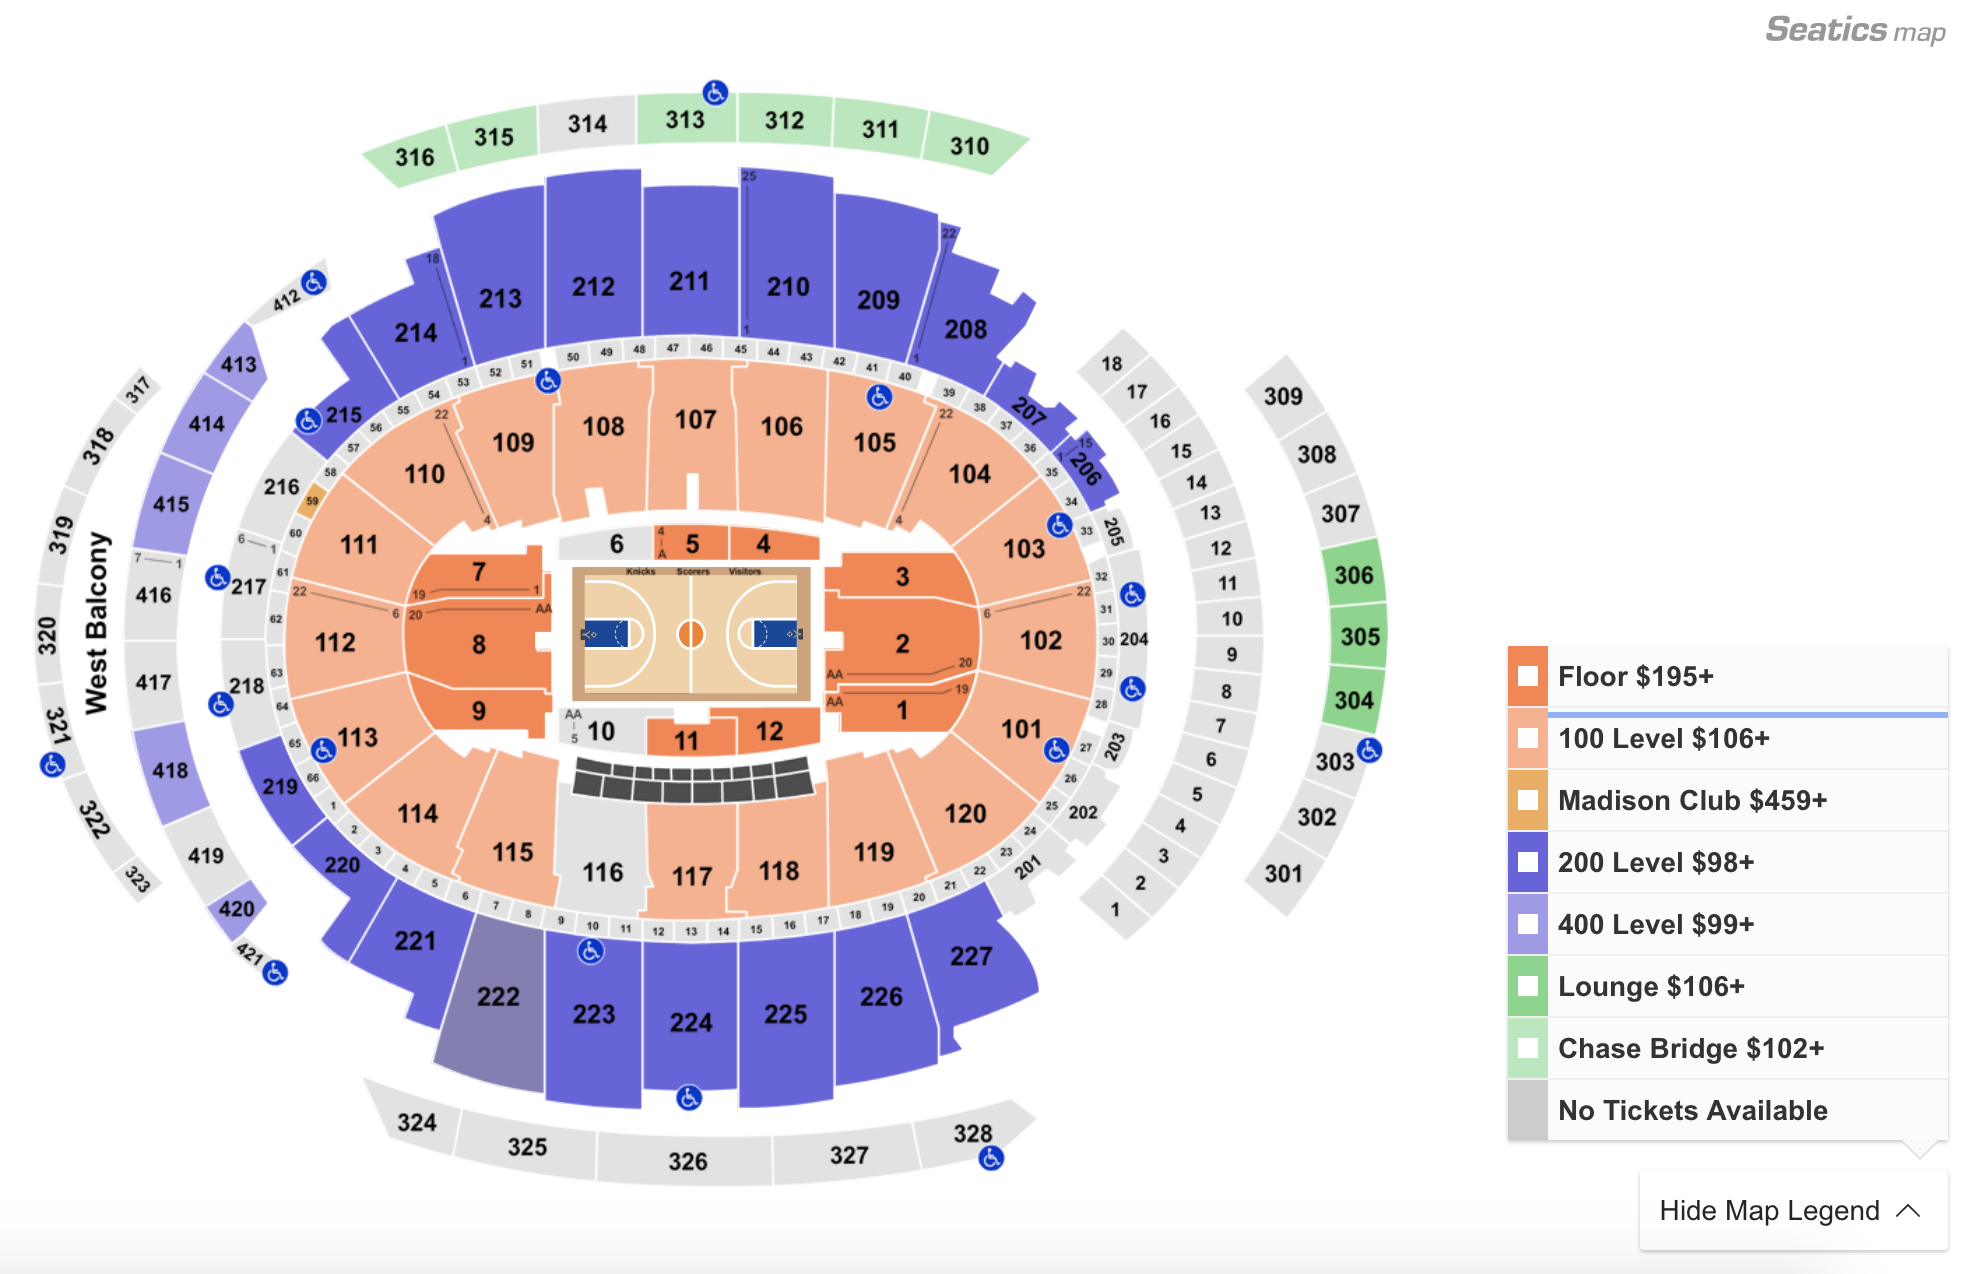 Dallas Mavericks Seating Chart Seat Numbers